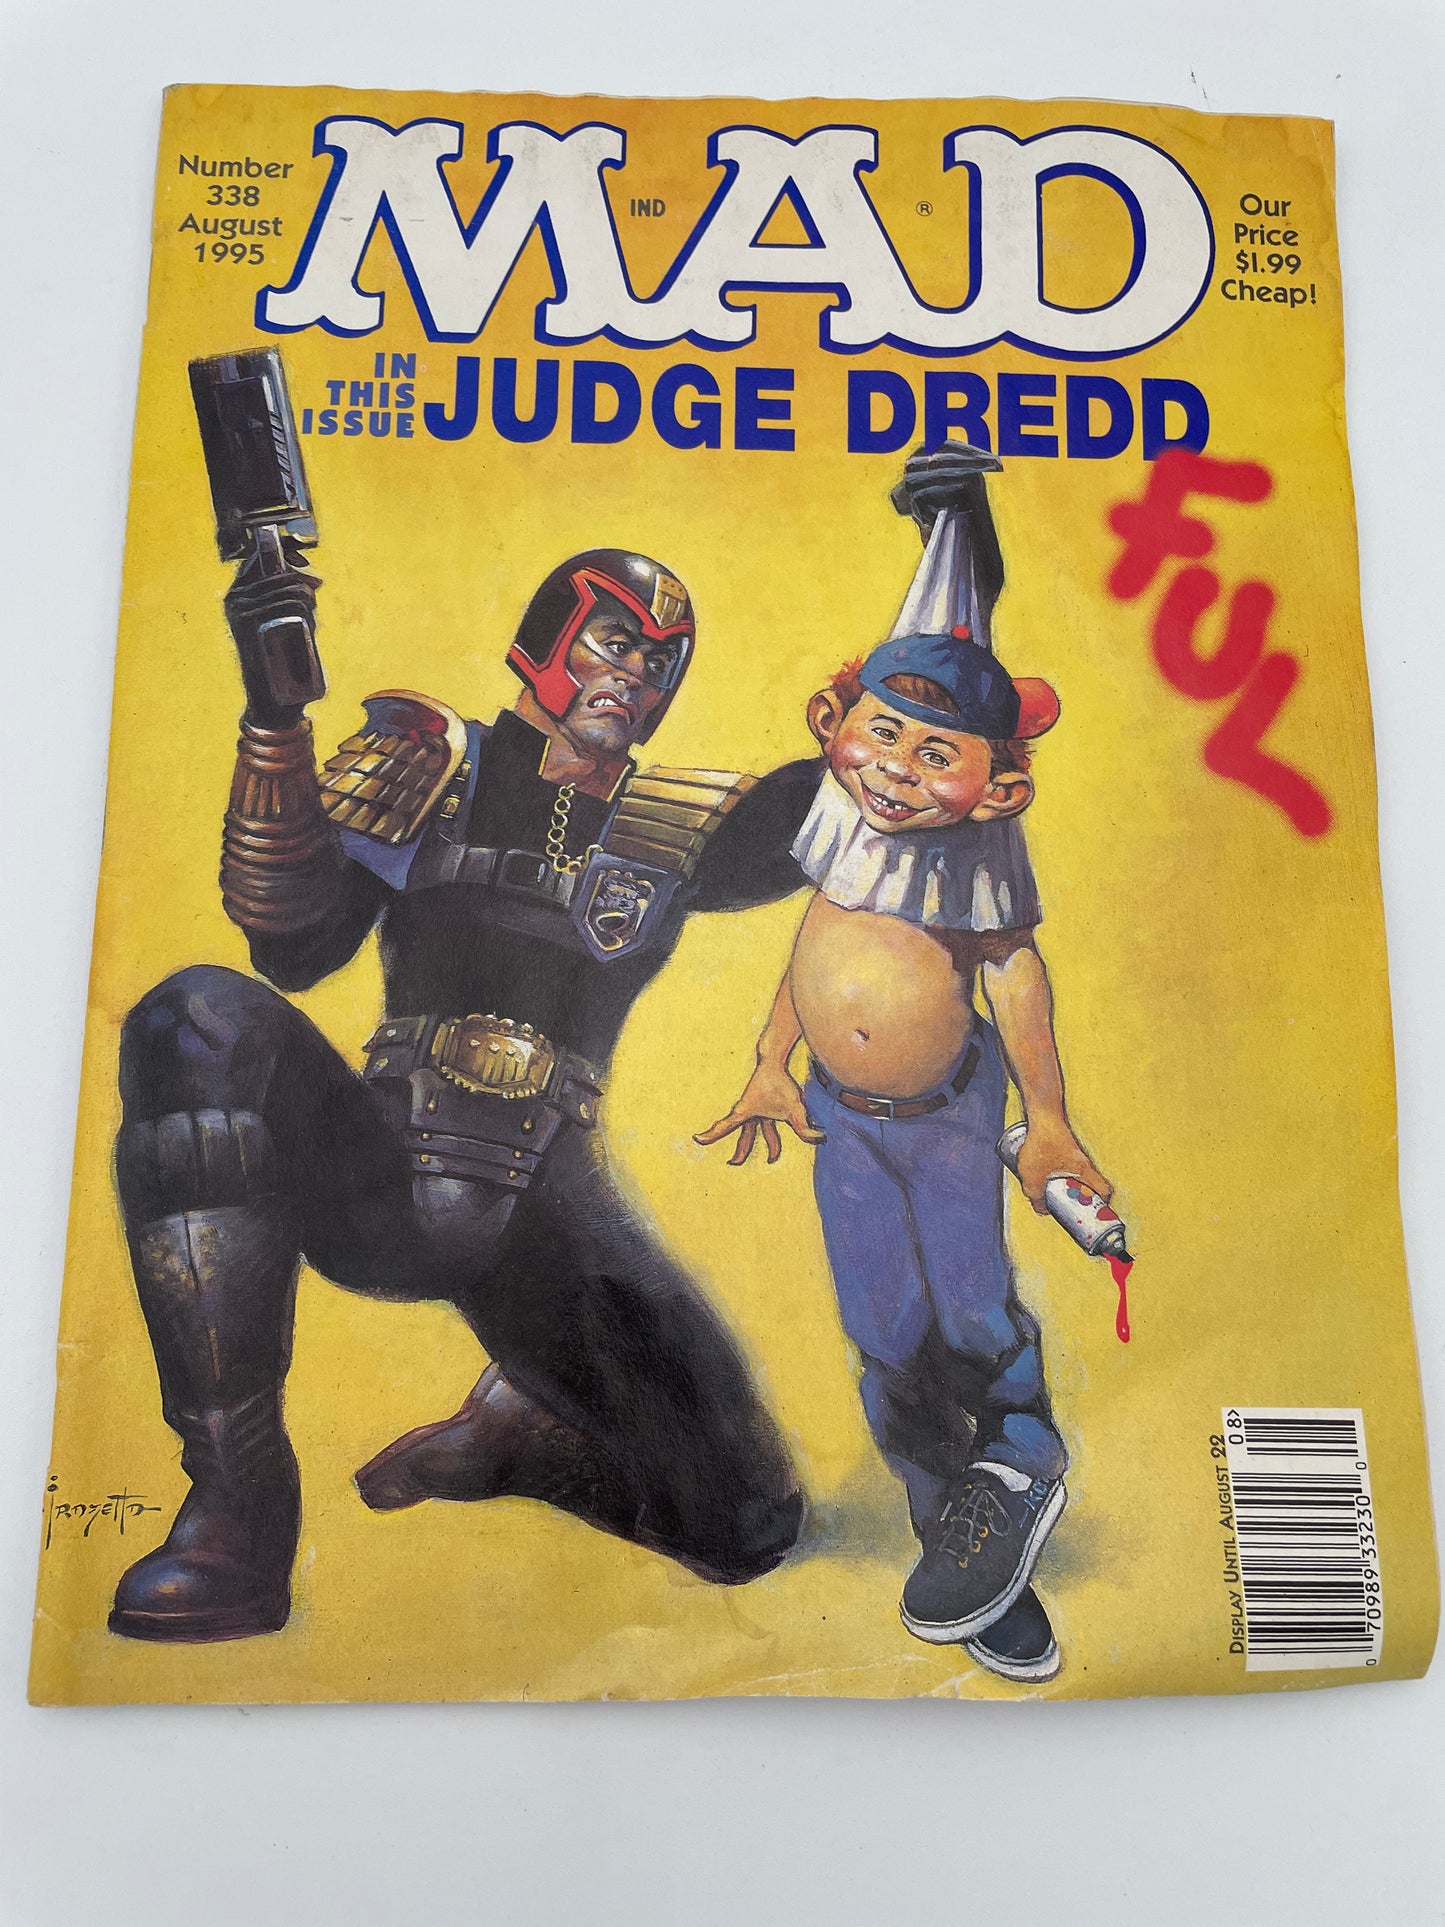 Mad Magazine - Judge Dredd #338 - August 1995 #101530